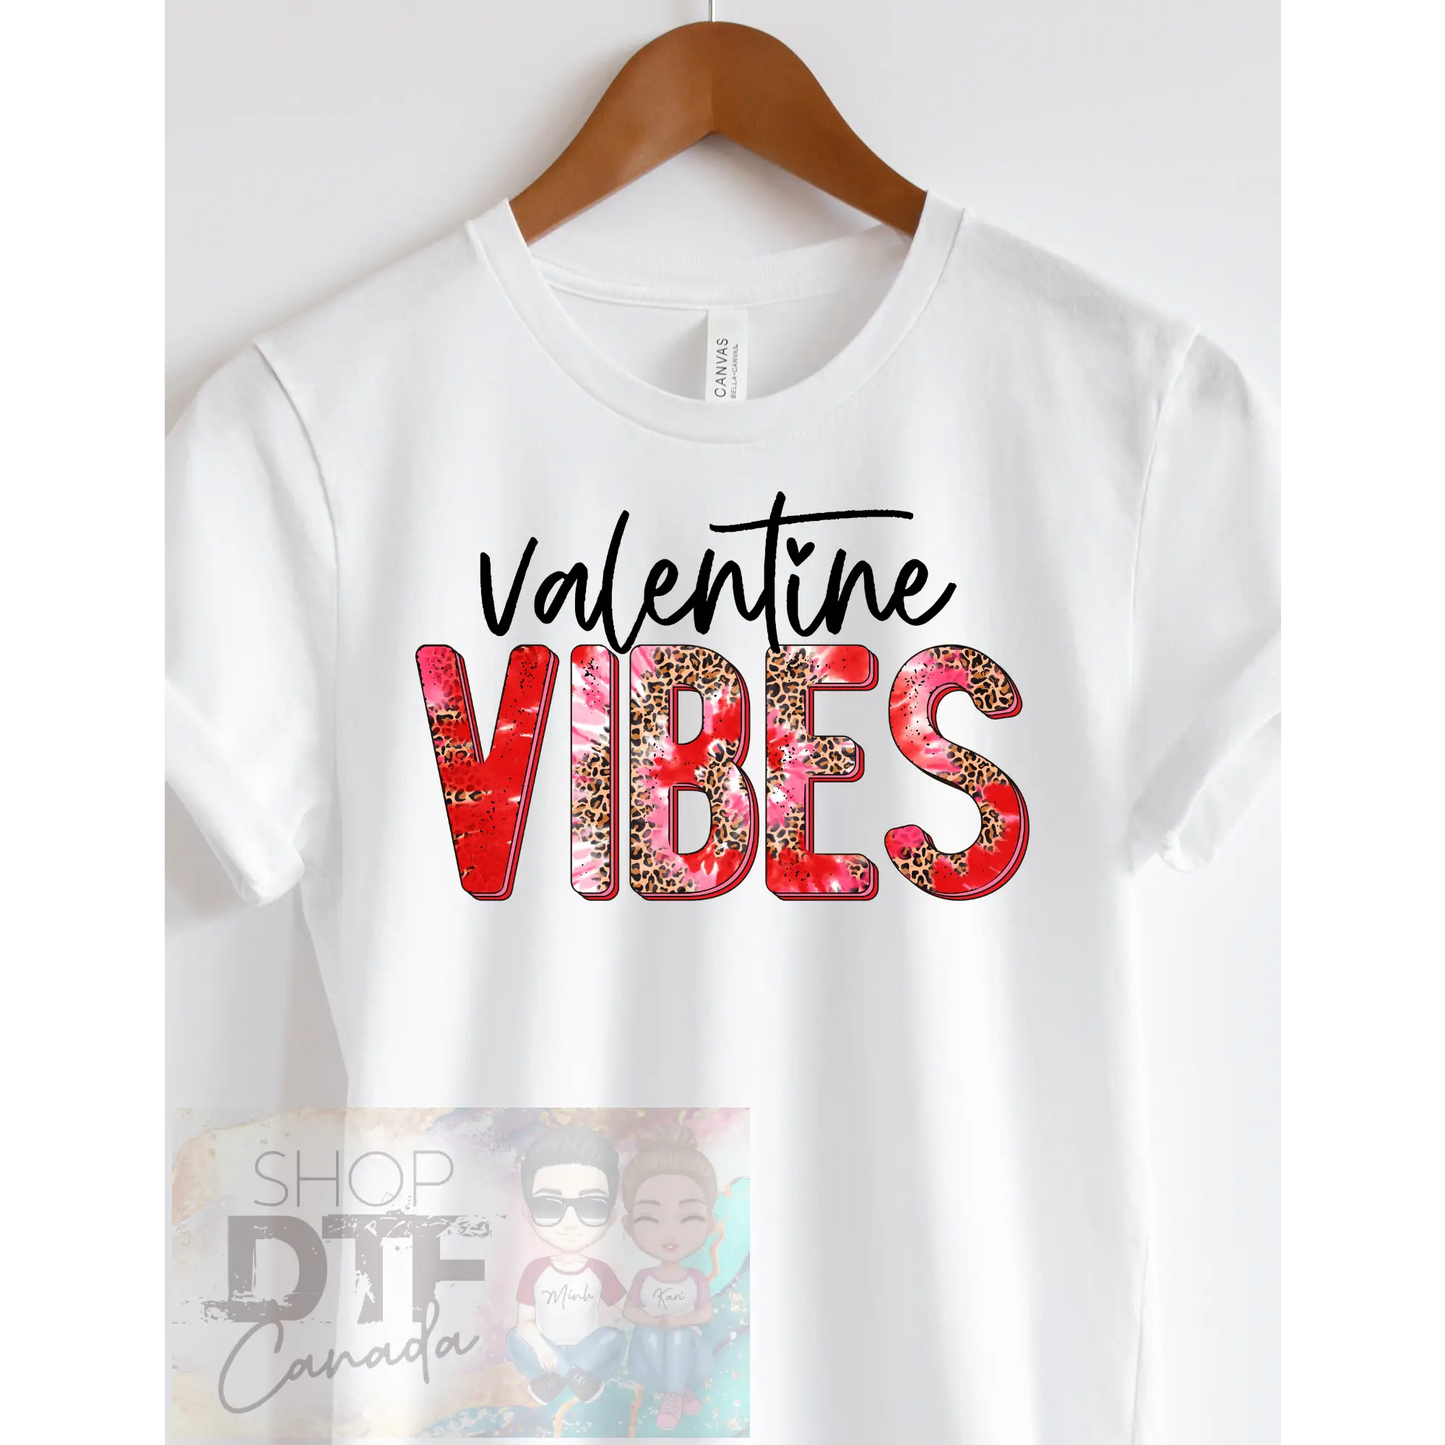 Valentine’s Day - Valentine Vibes - Shirts & Tops